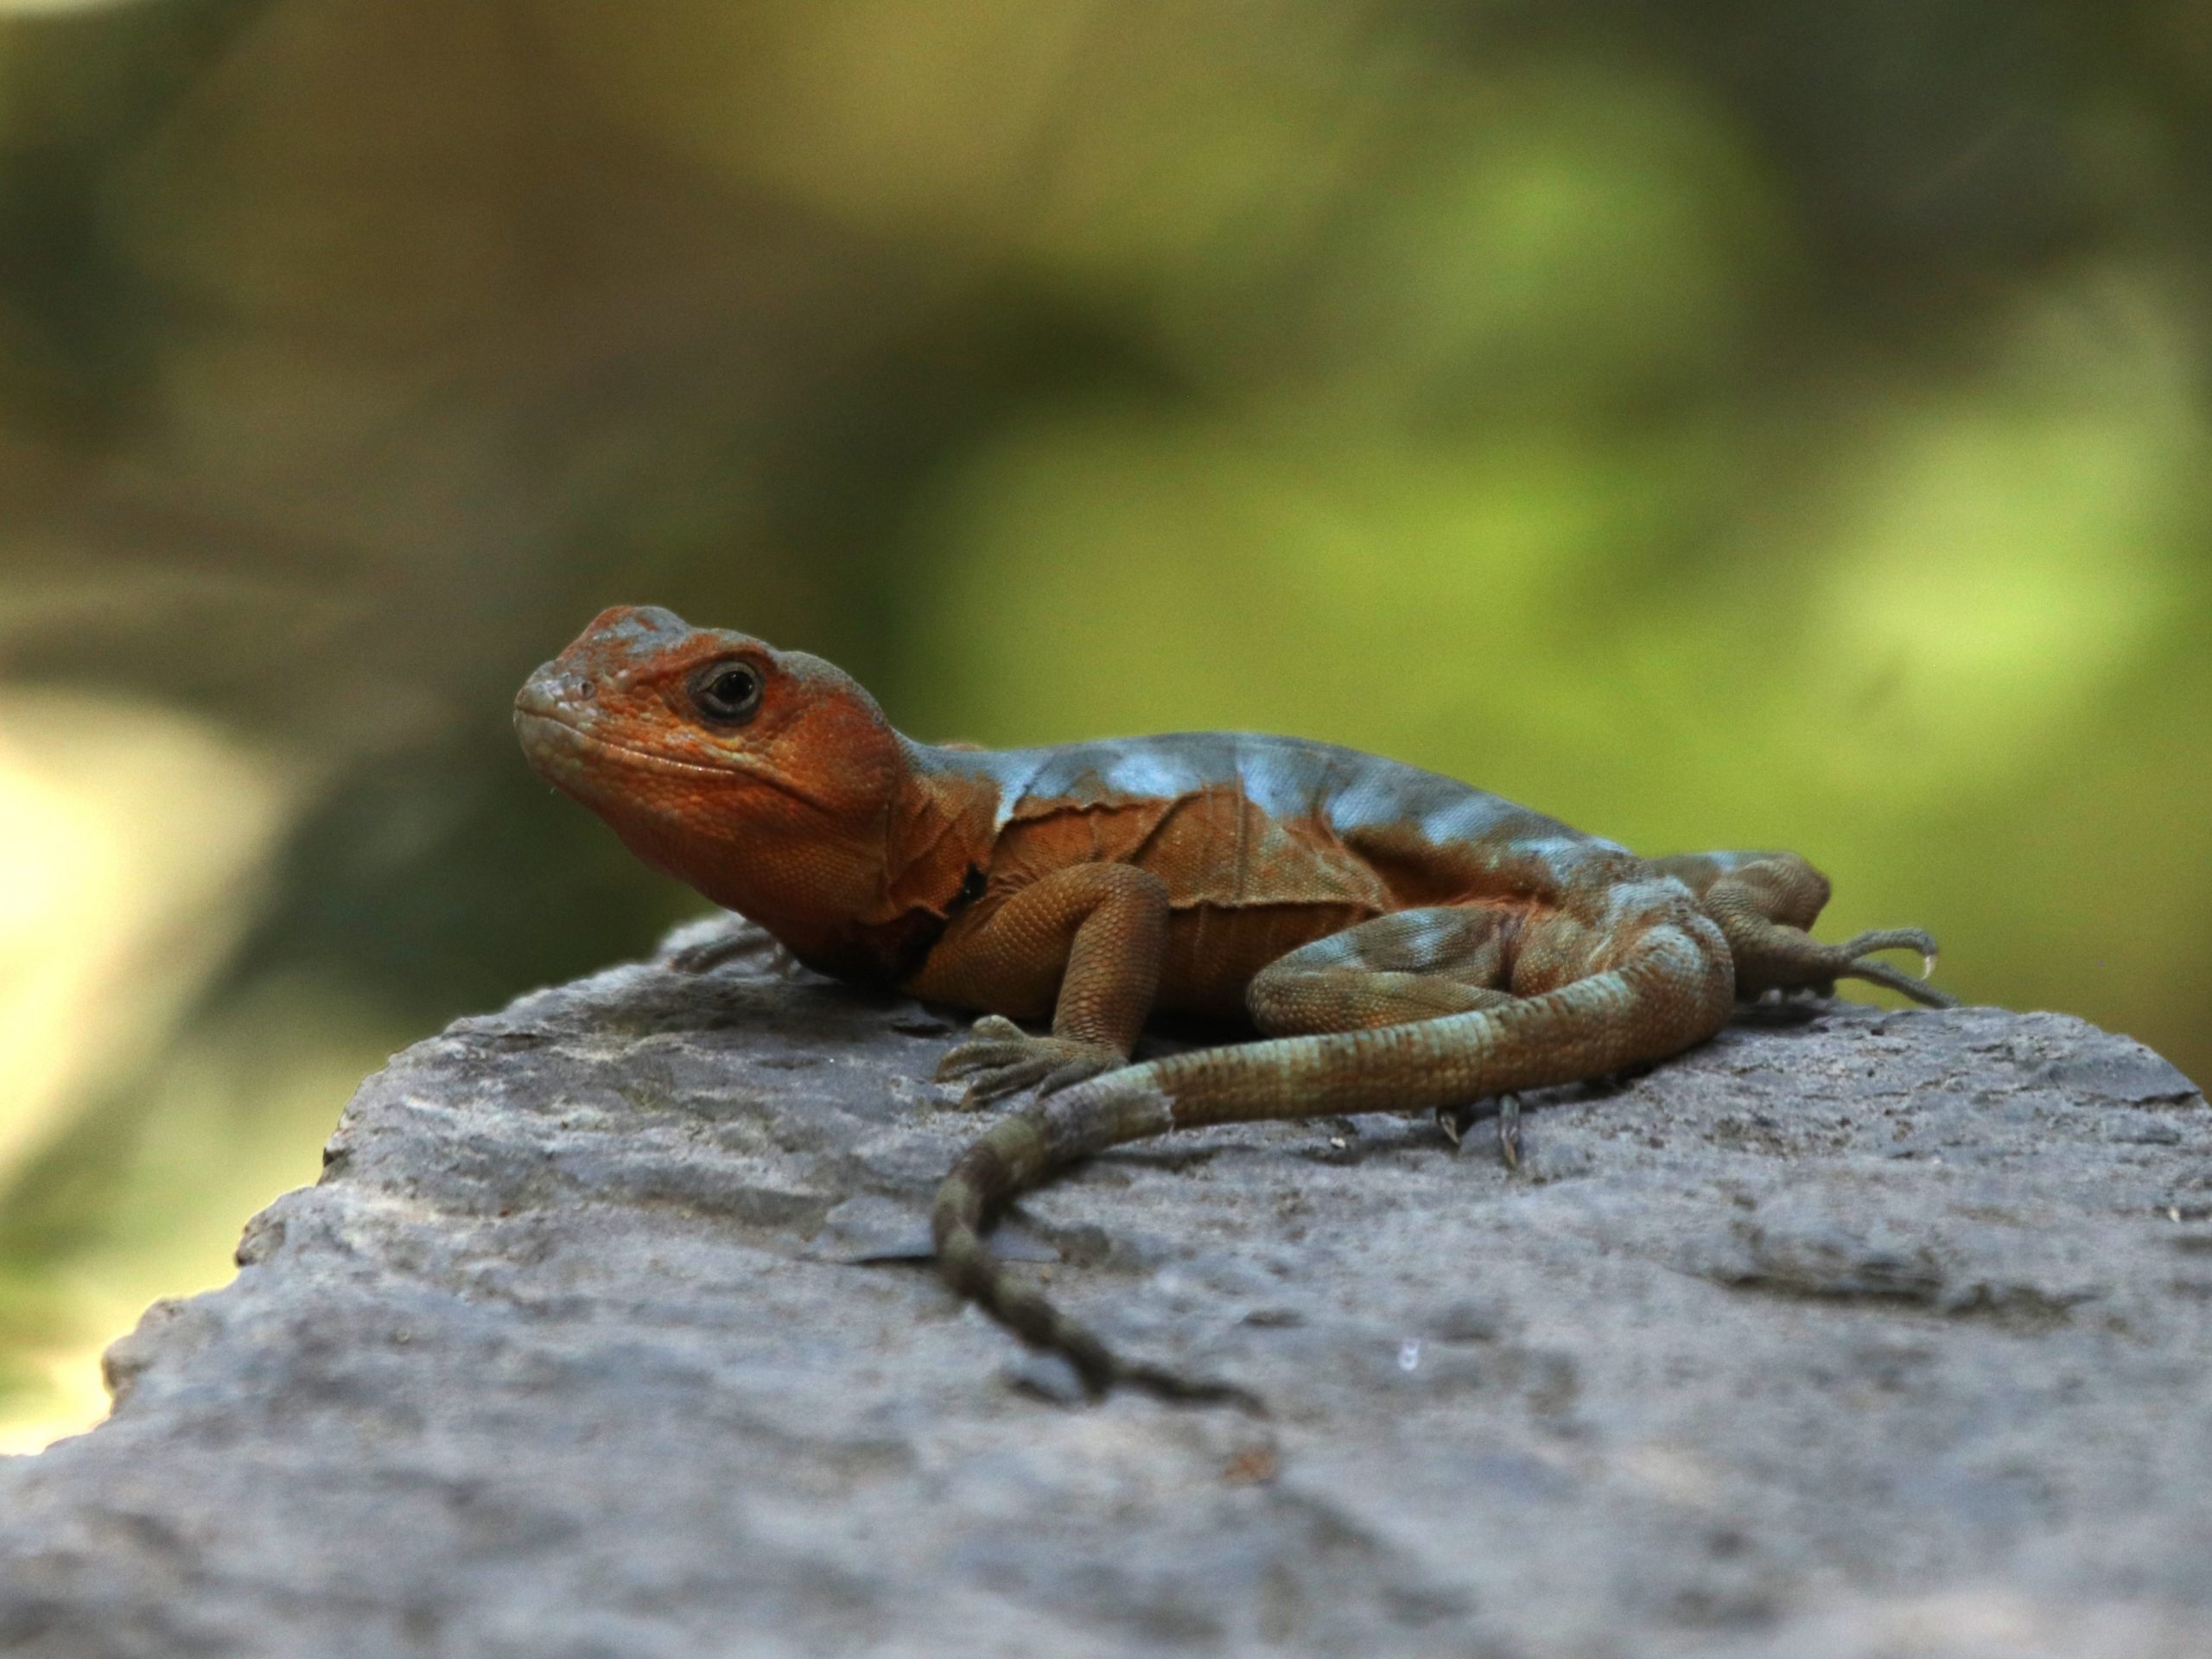 Pristidactylus torquatus basking on a rock in dappled shade